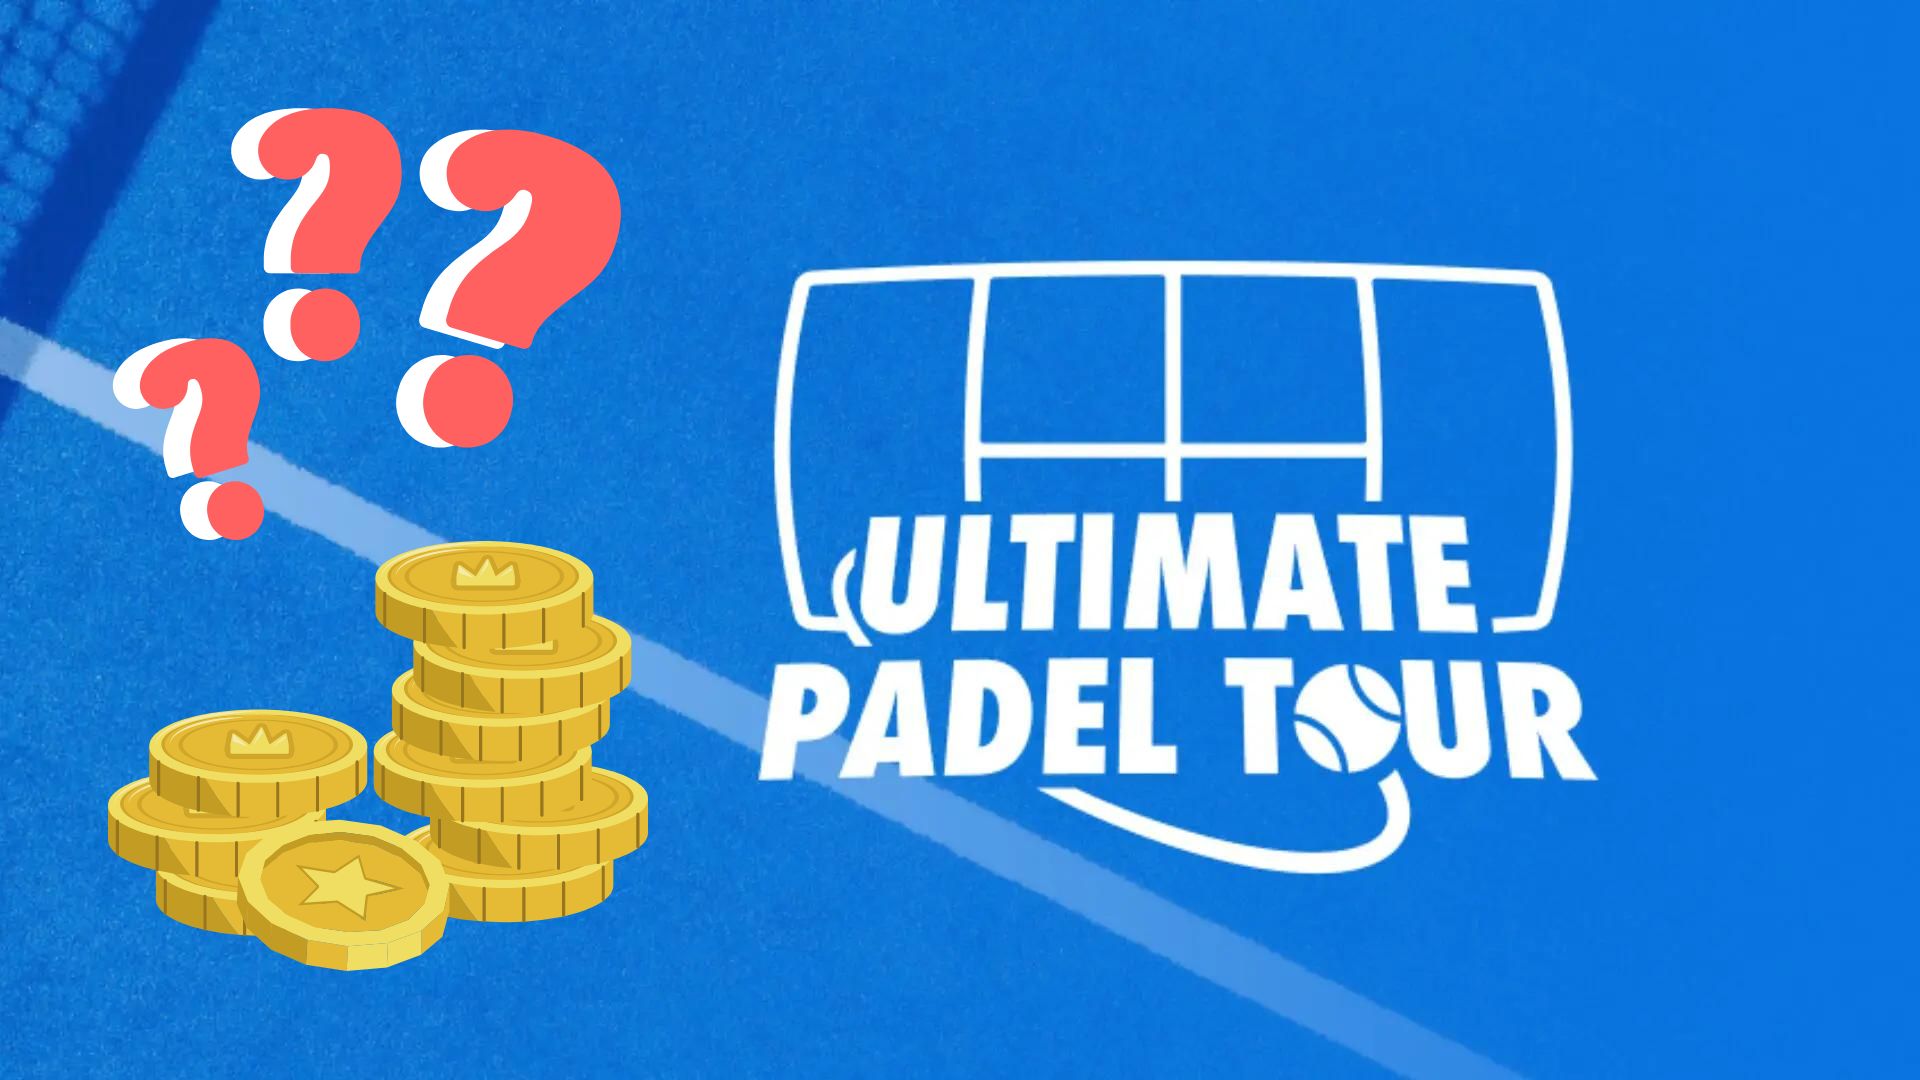 Quanto guadagnano i giocatori Ultimate? Padel Torre ?